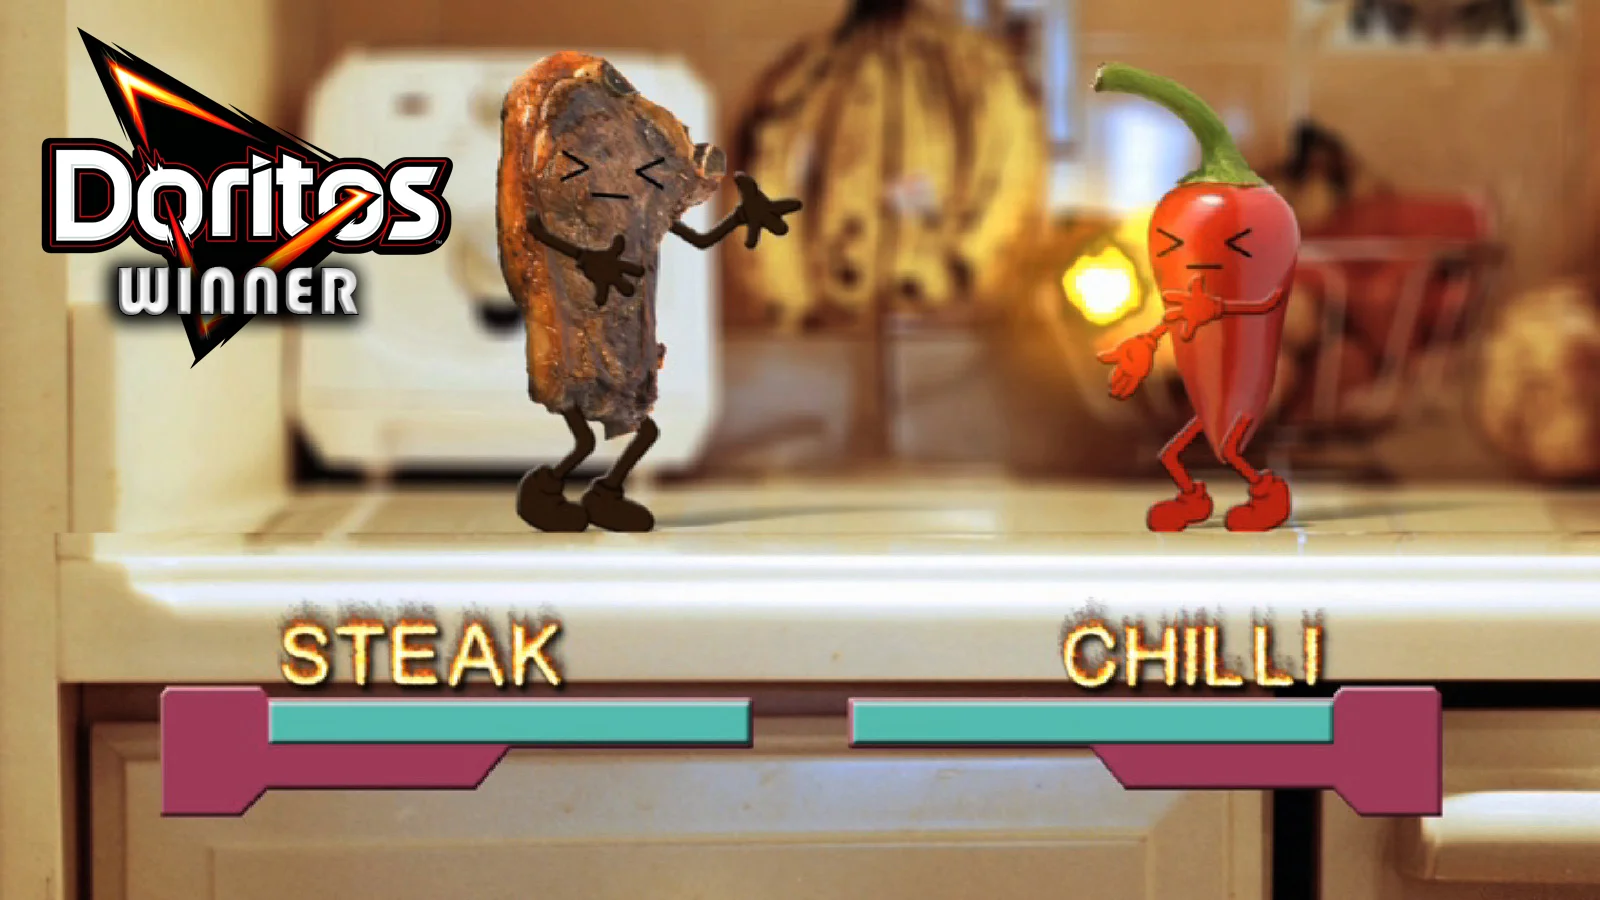 "Steak vs Chilli" Doritos TV Commercial 15 Seconds of Flavour winner